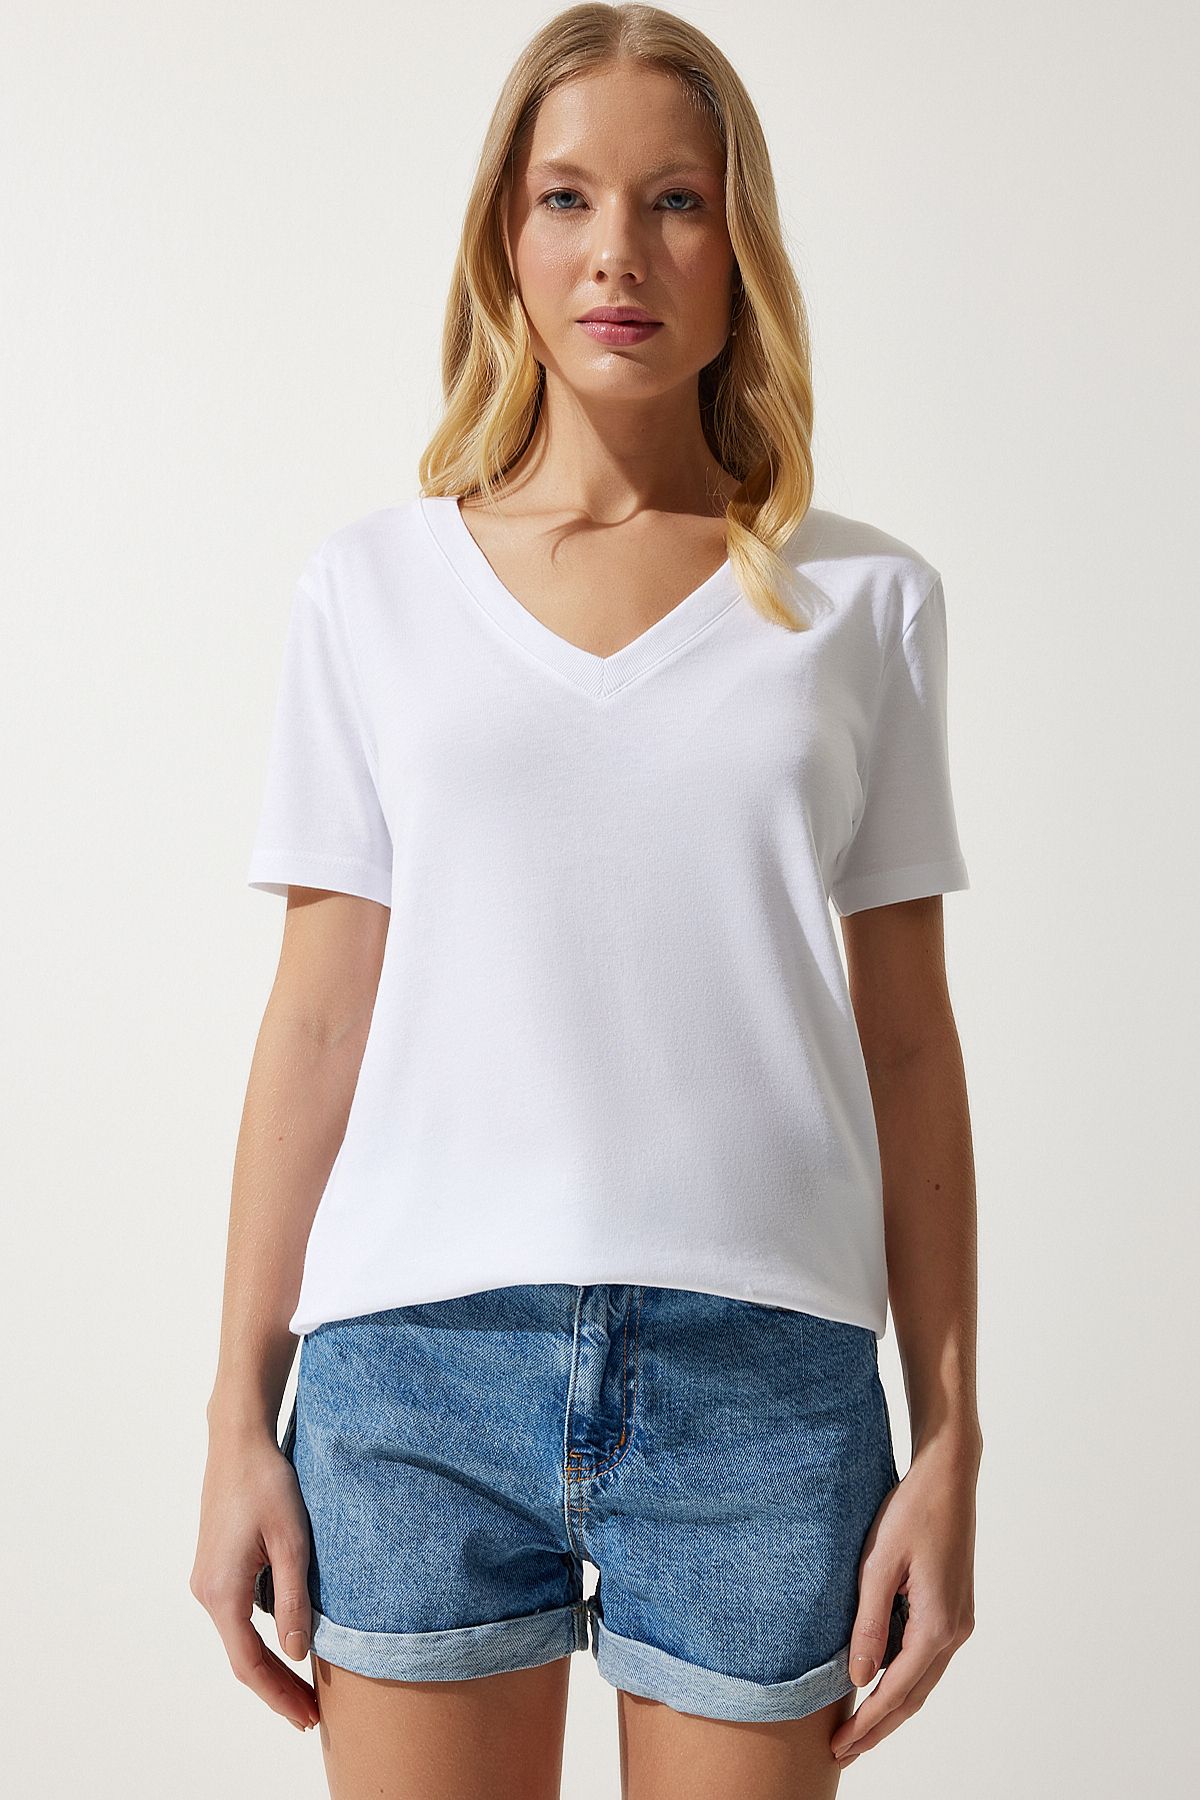 Happiness İstanbul Kadın Beyaz V Yaka Modal Örme T-Shirt HW00009